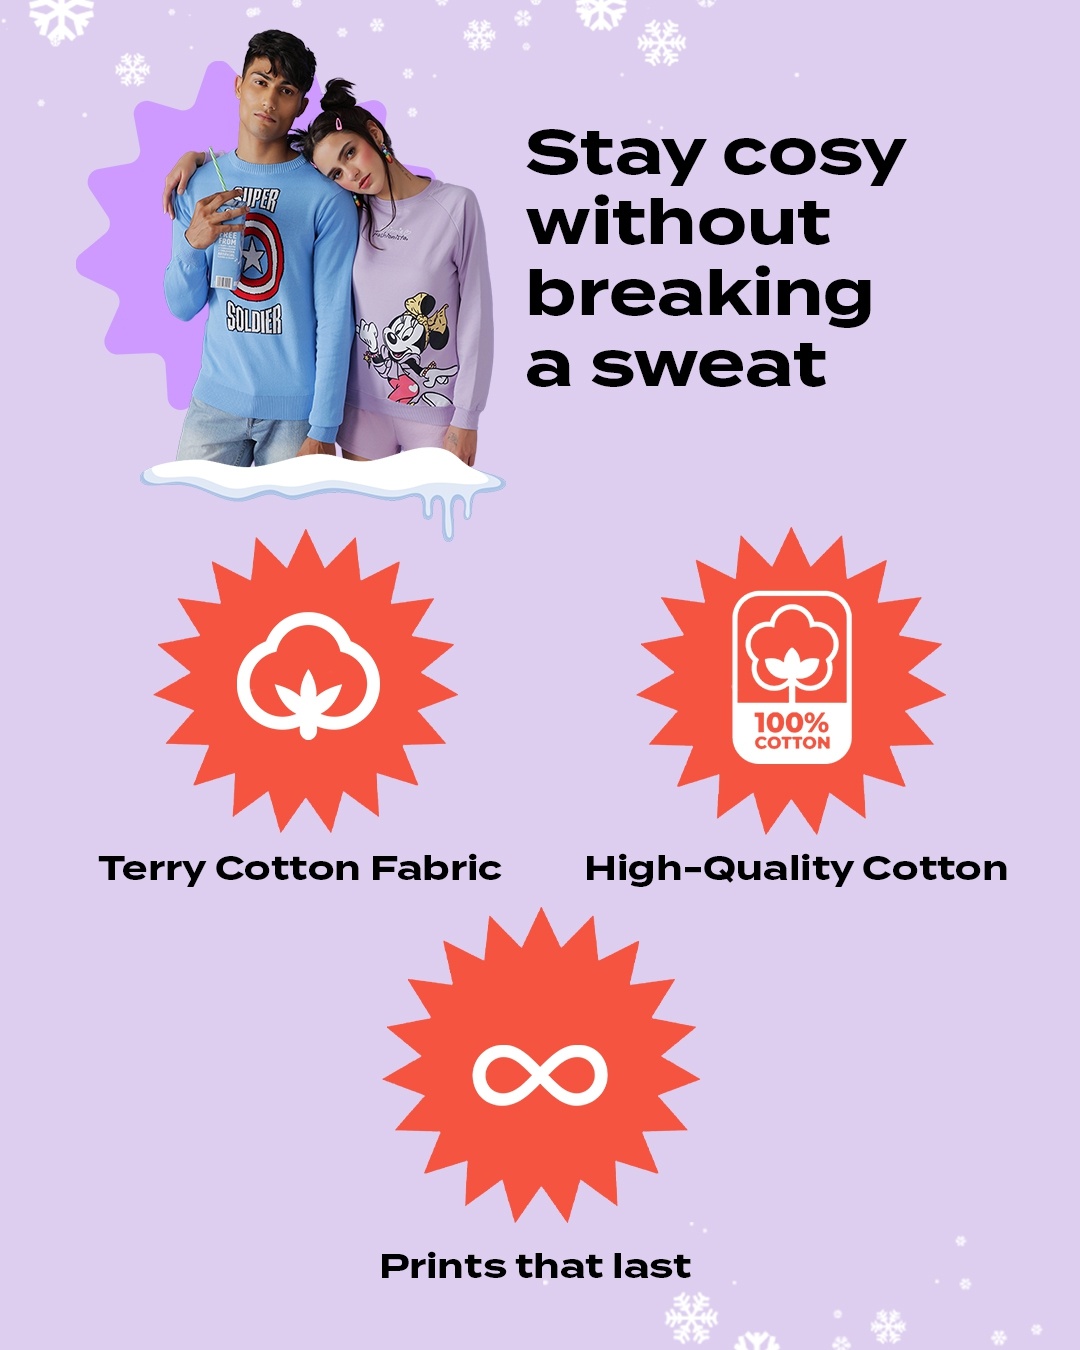 Shop Women's Black Mickey Typography Short Sweatshirt